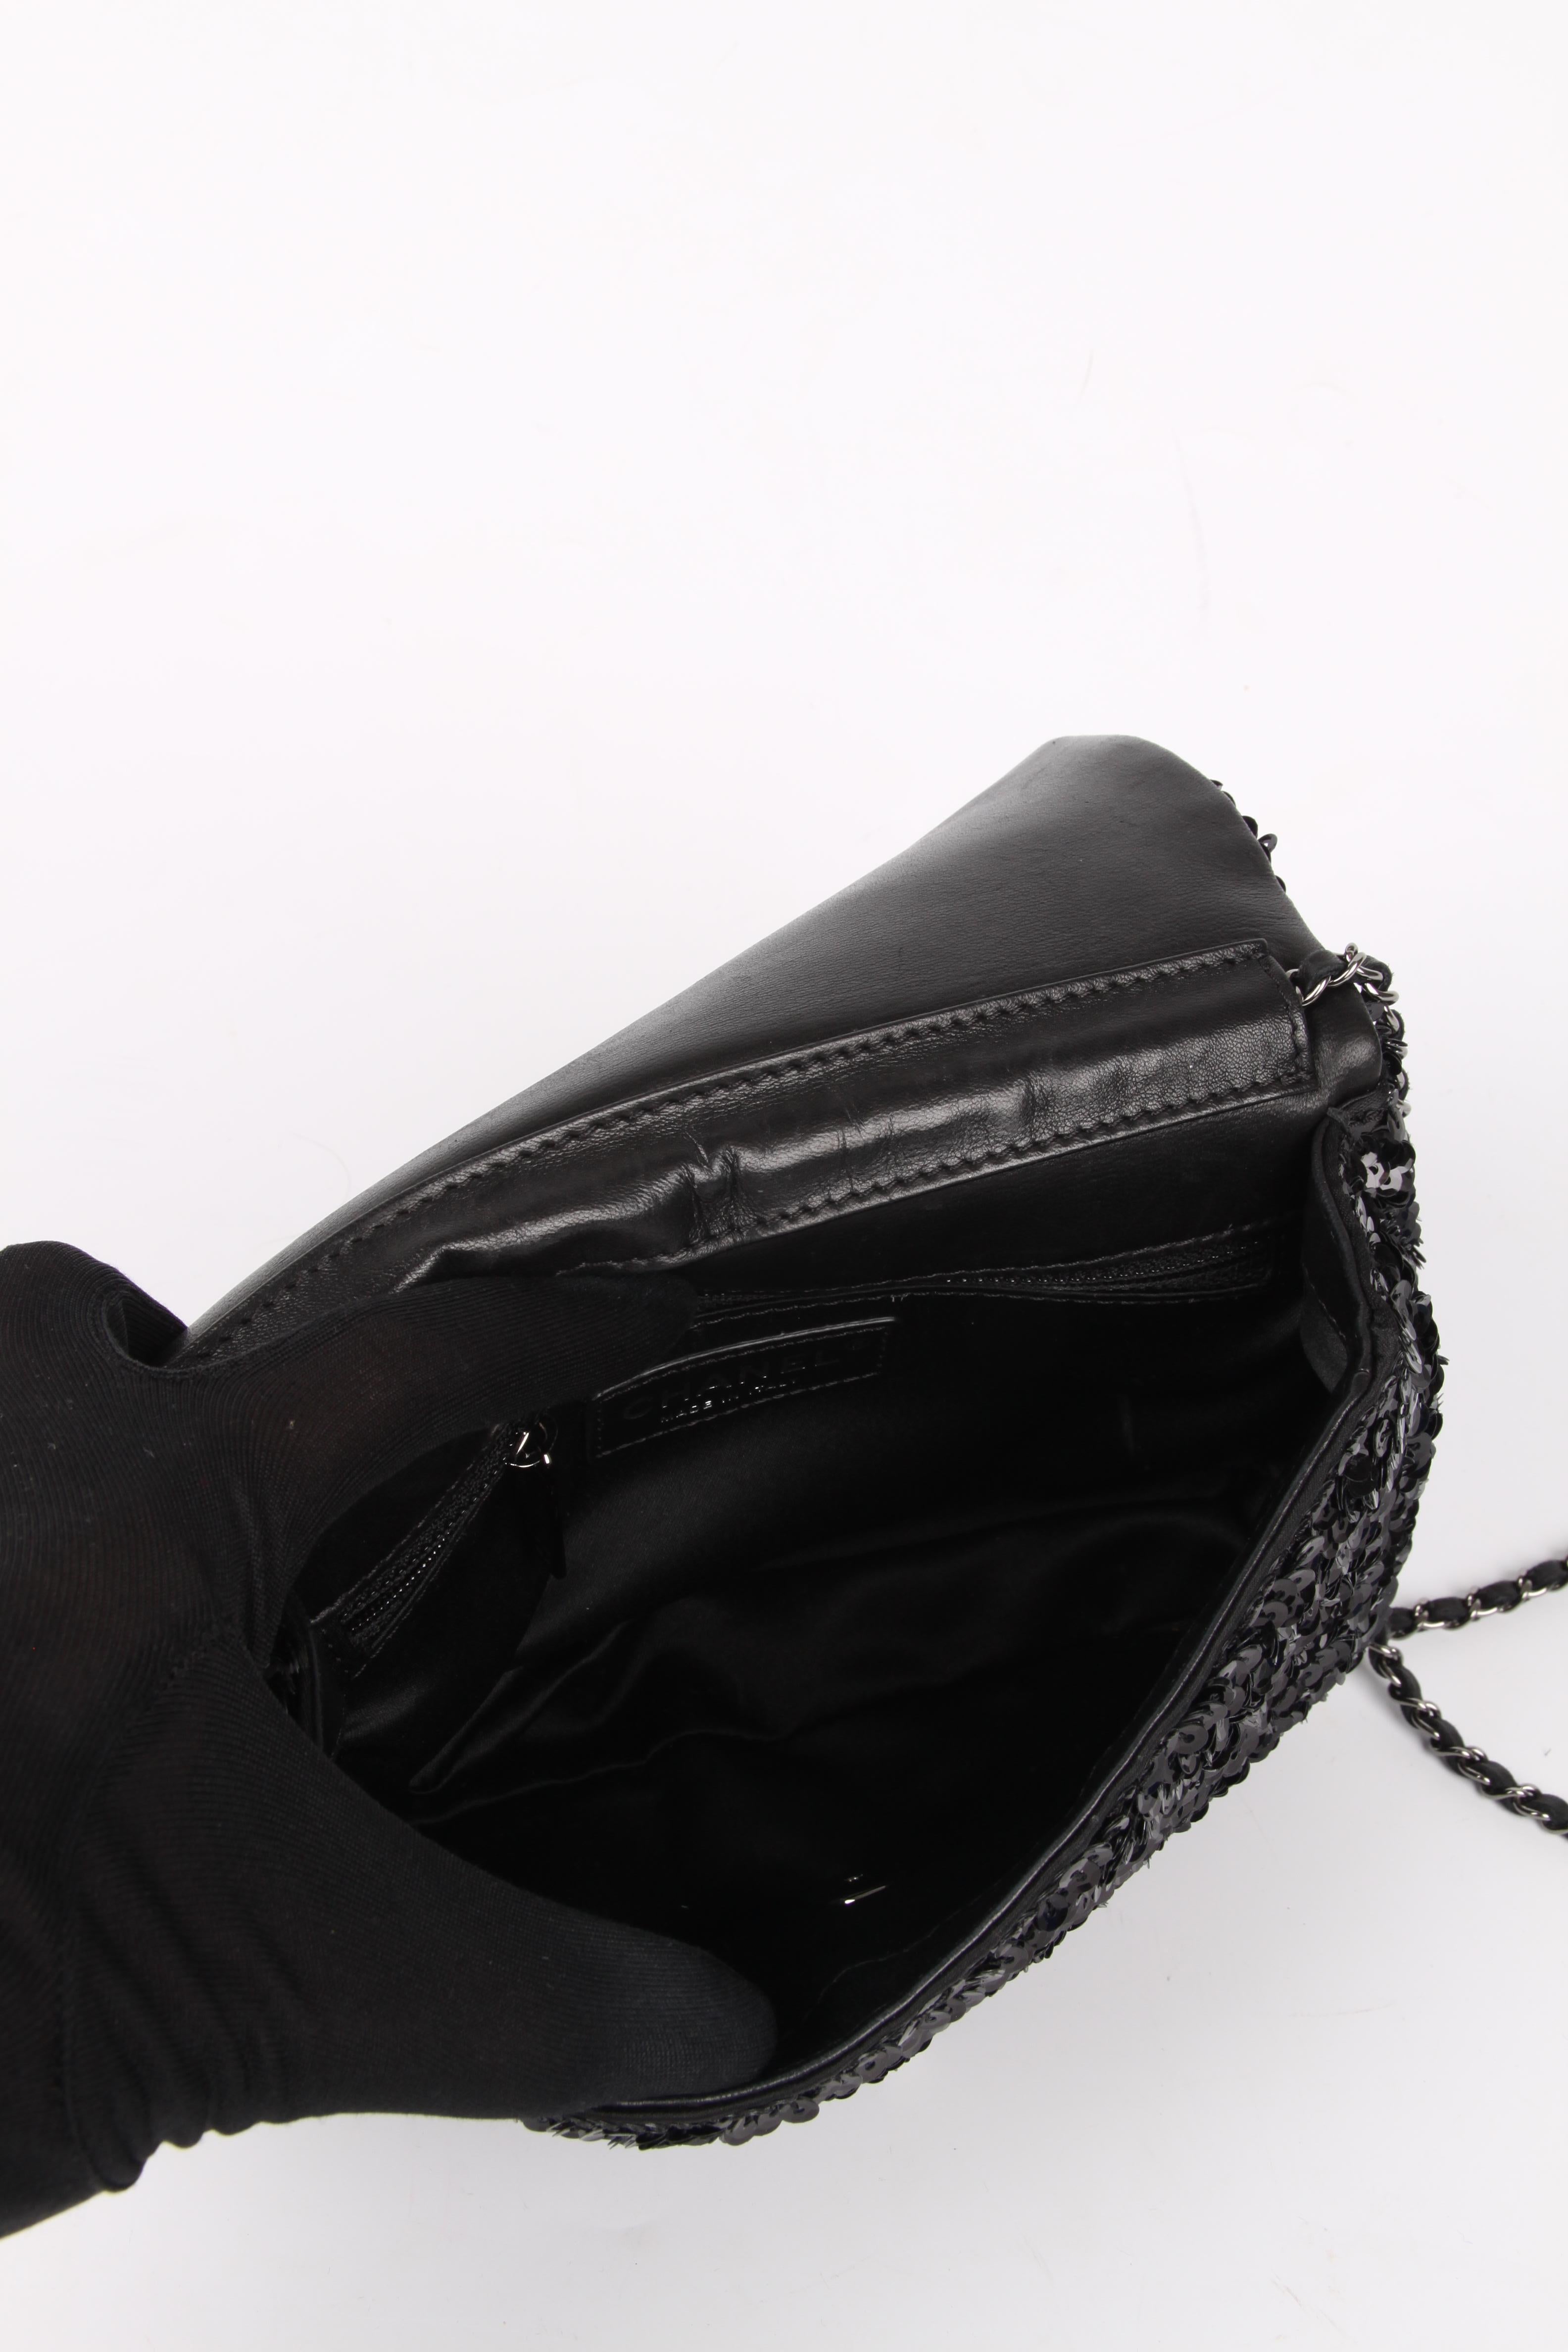 Chanel Classic Sequin Flap Bag - black 1